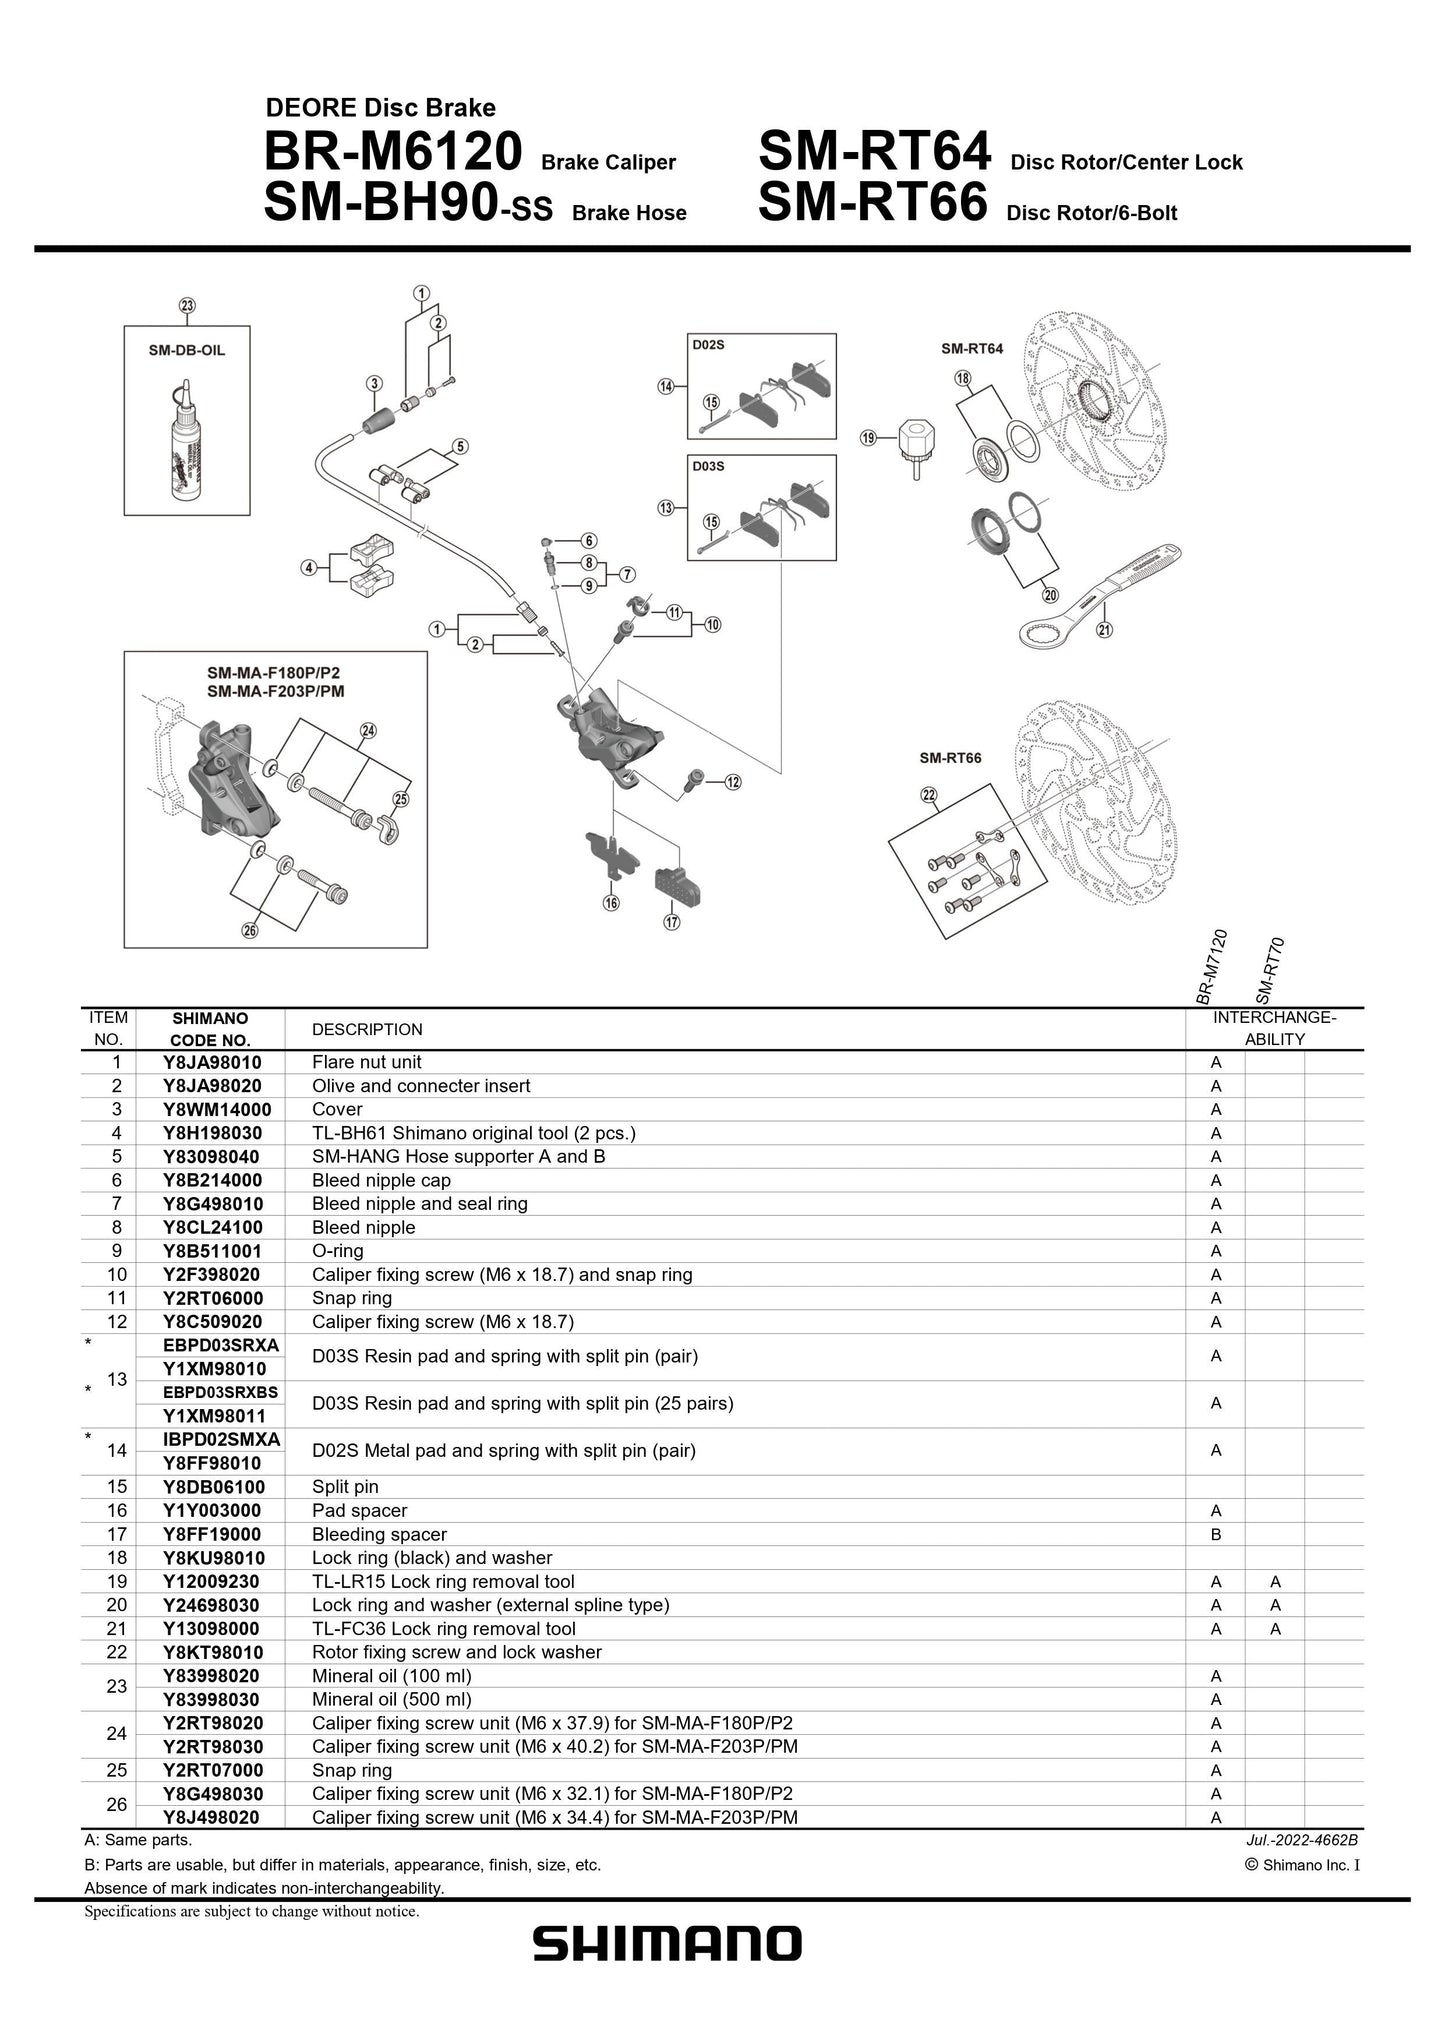 SHIMANO DEORE BL-M6100/ BR-M6120 Hydraulic Disc Brake Set 4-Piston-Pit Crew Cycles